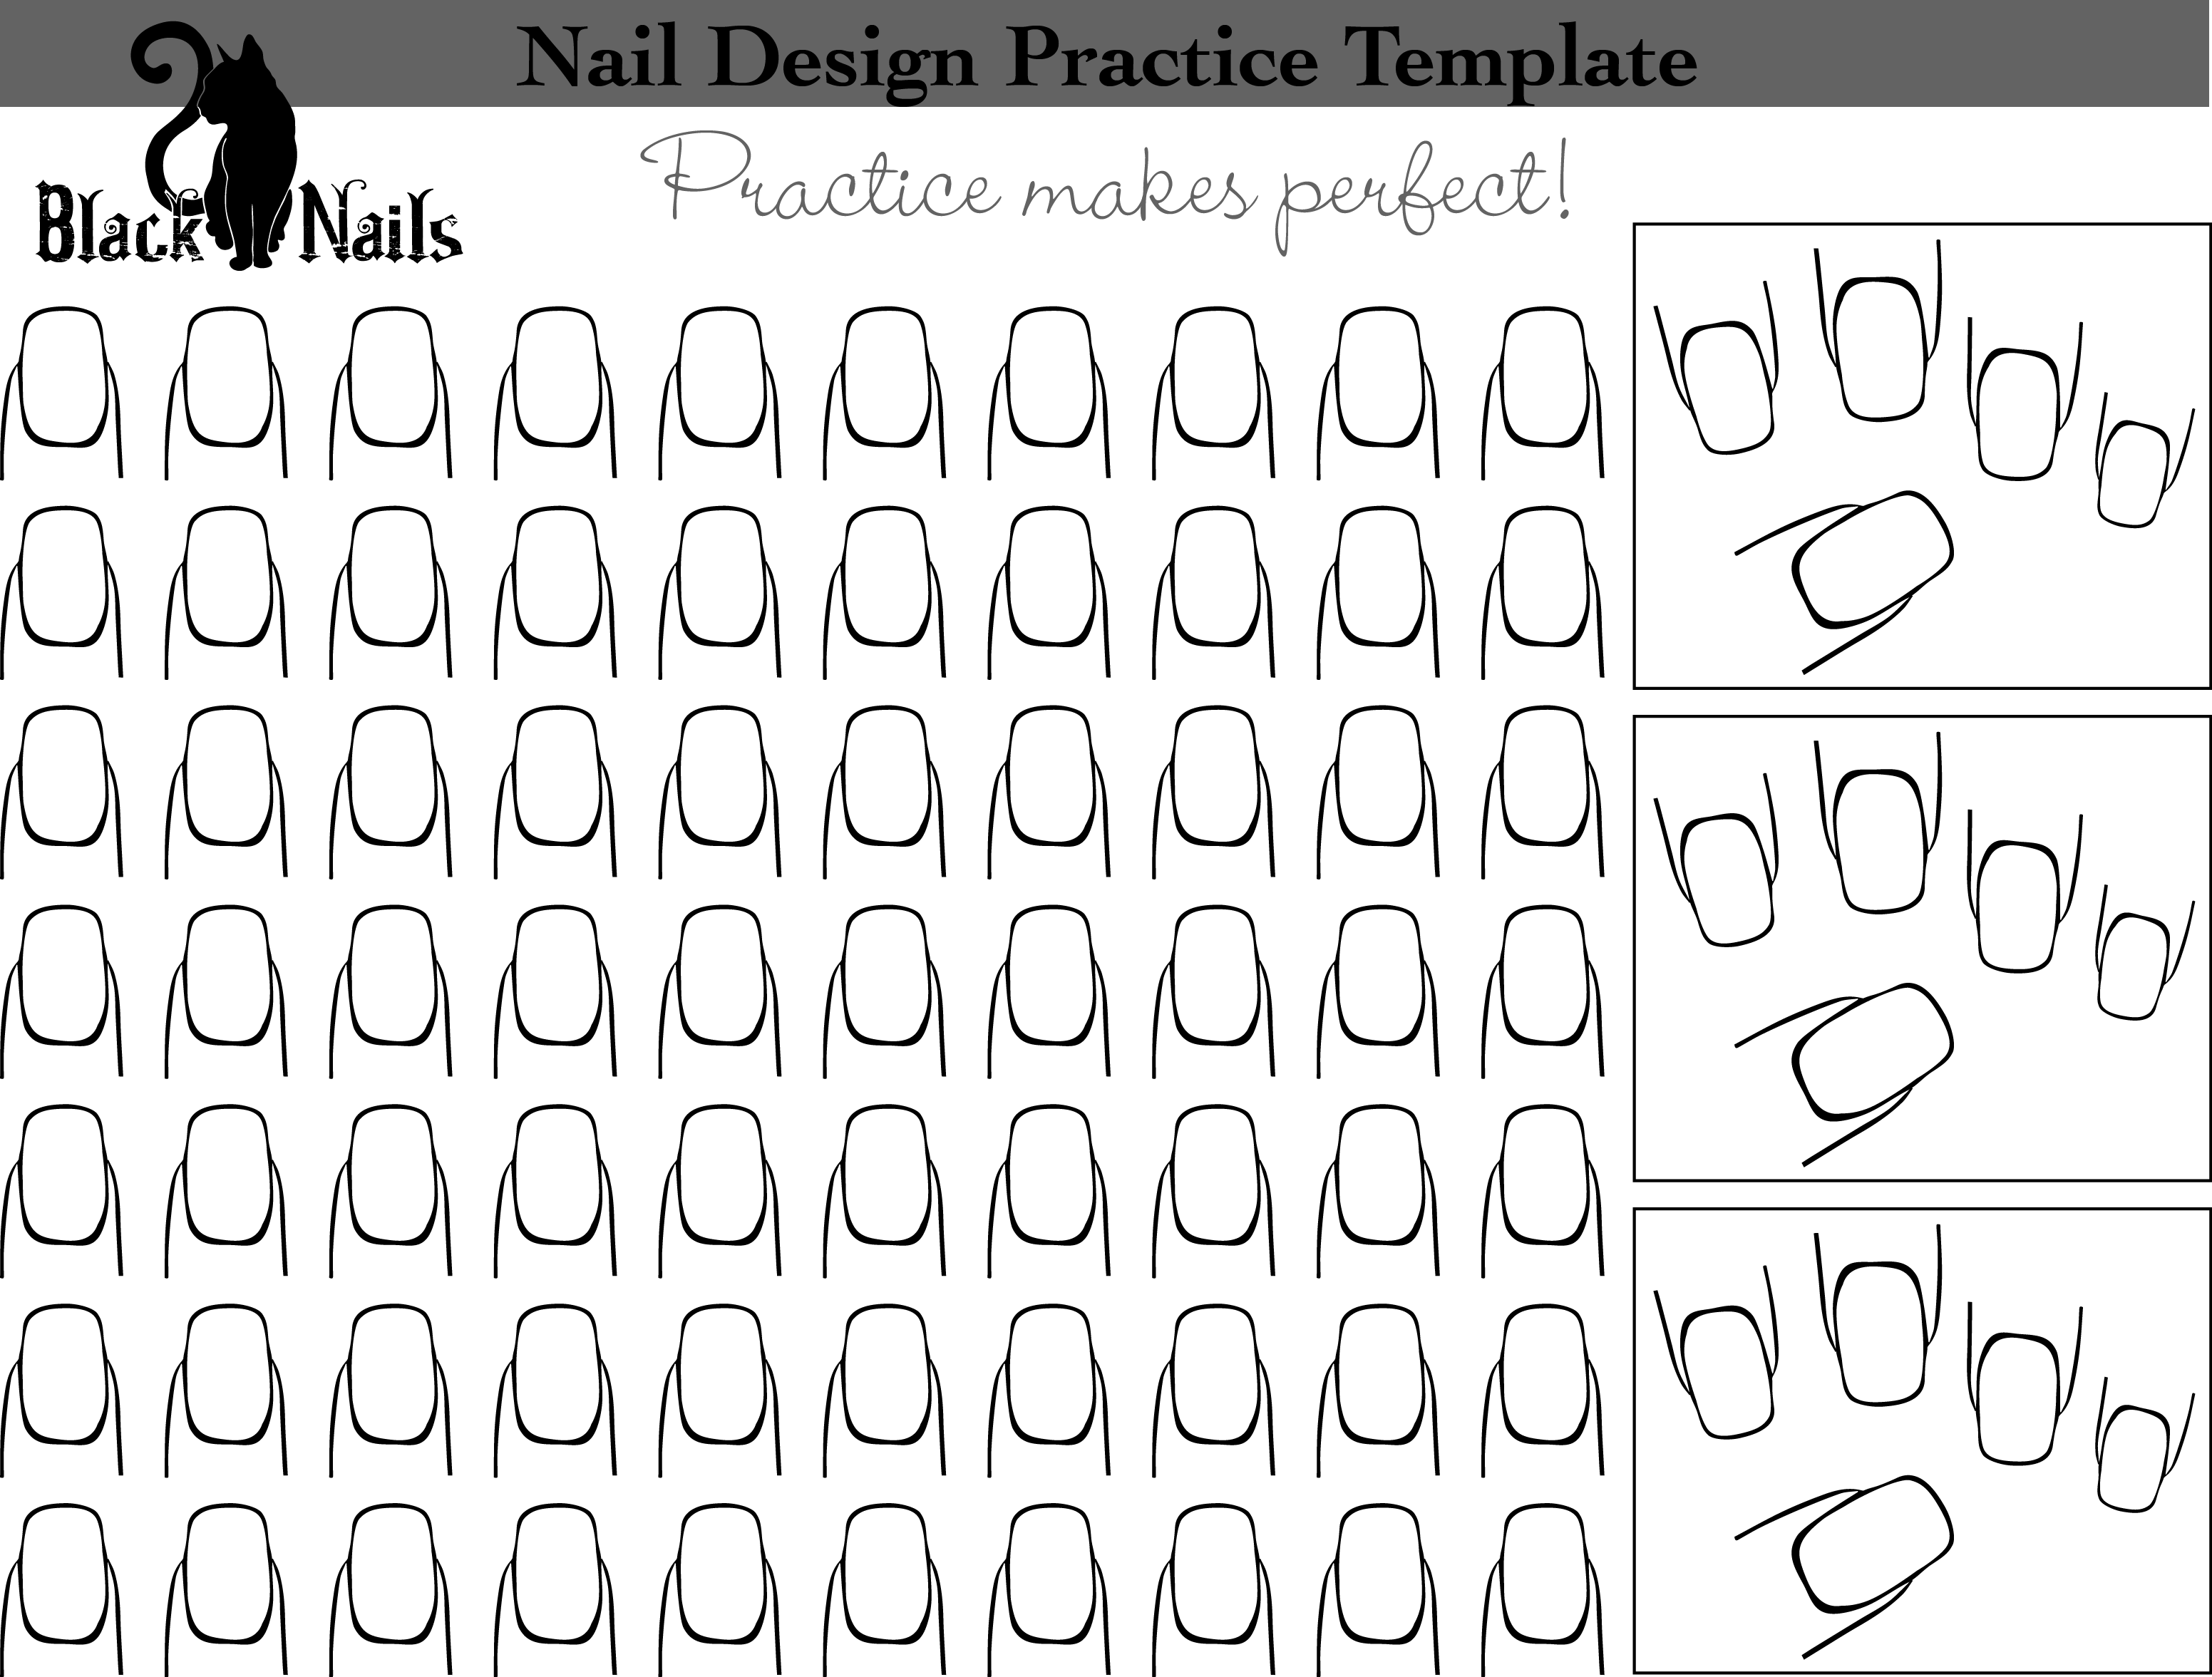 Nail Art Design Practice Sheet